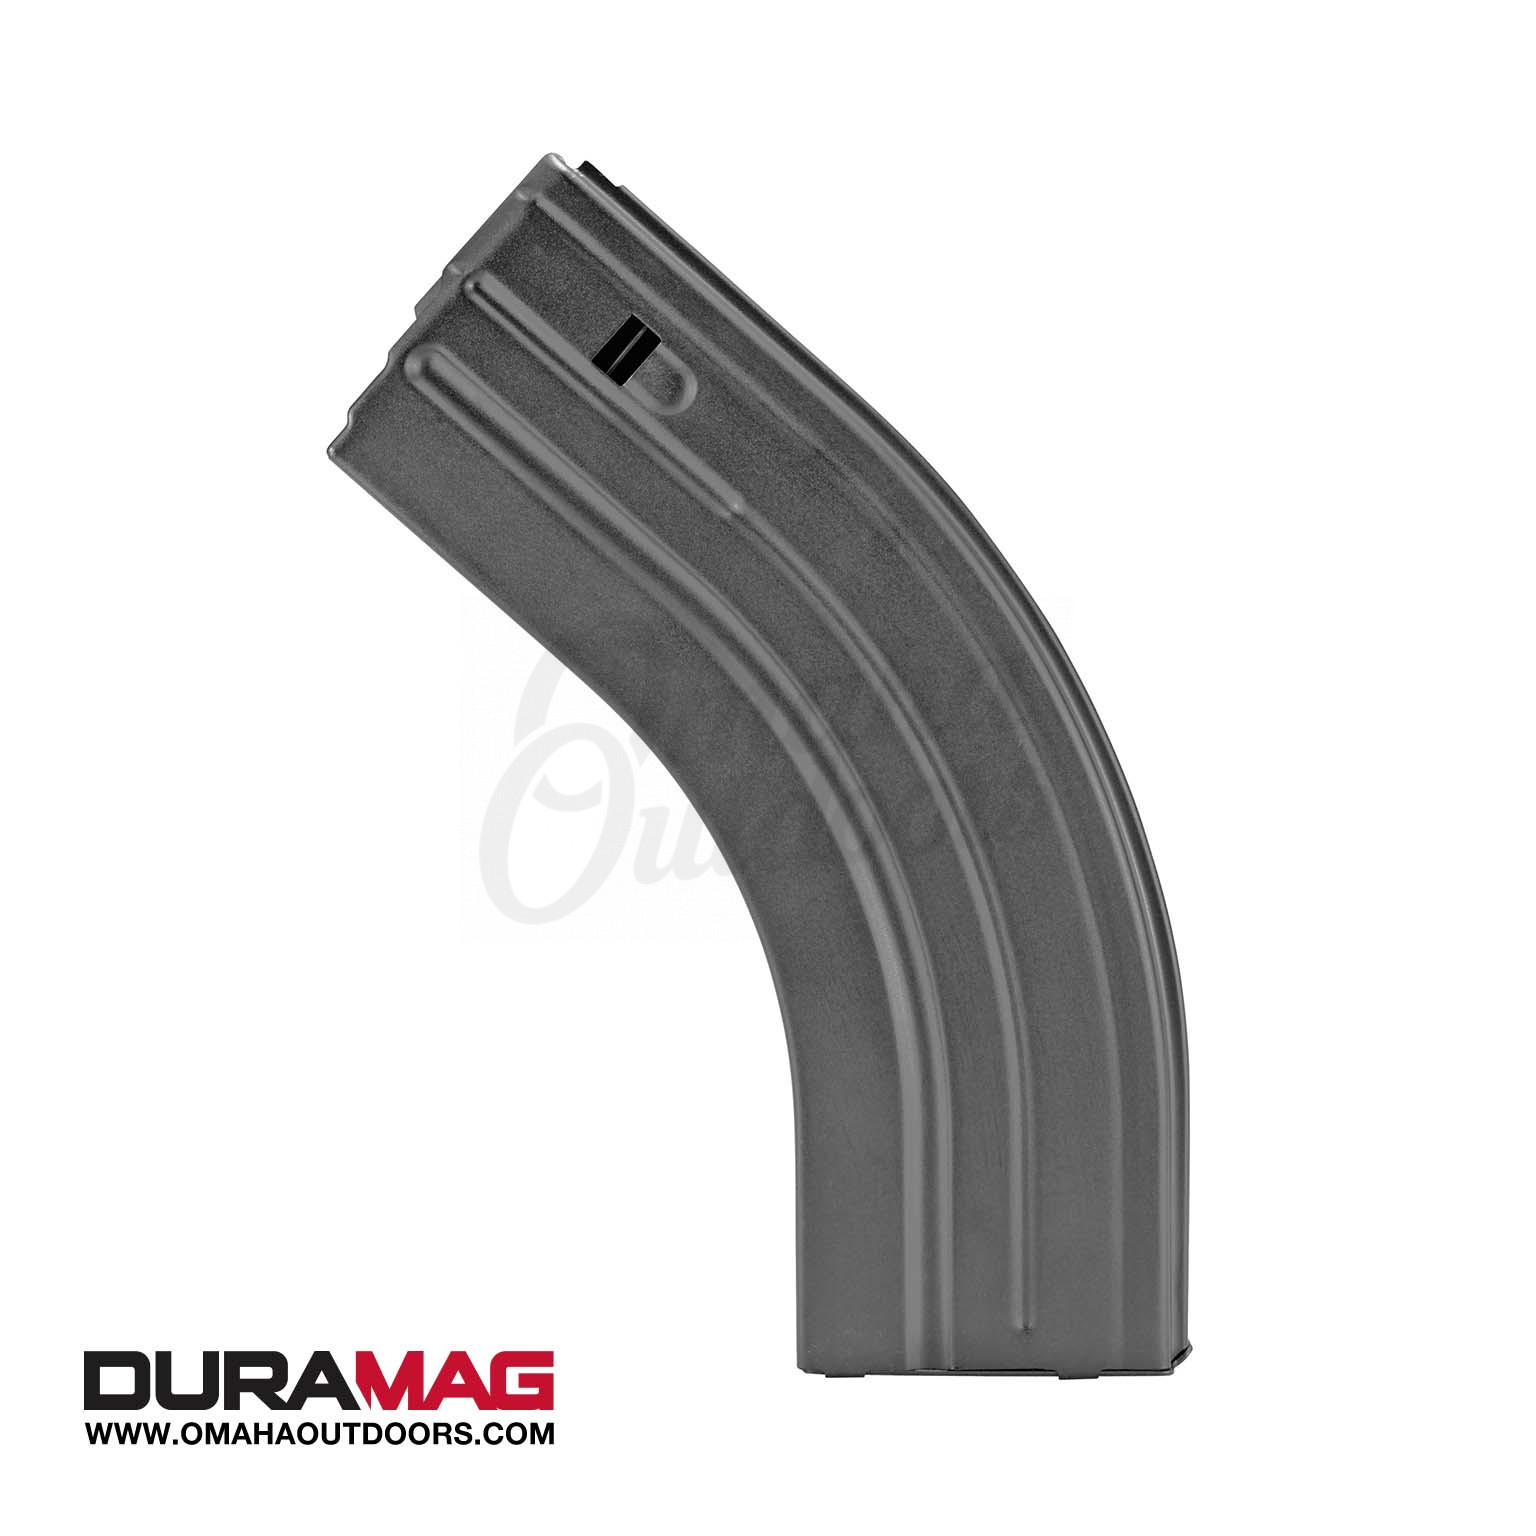 30 Round Duramag Rifle magazines – Design Lab 304